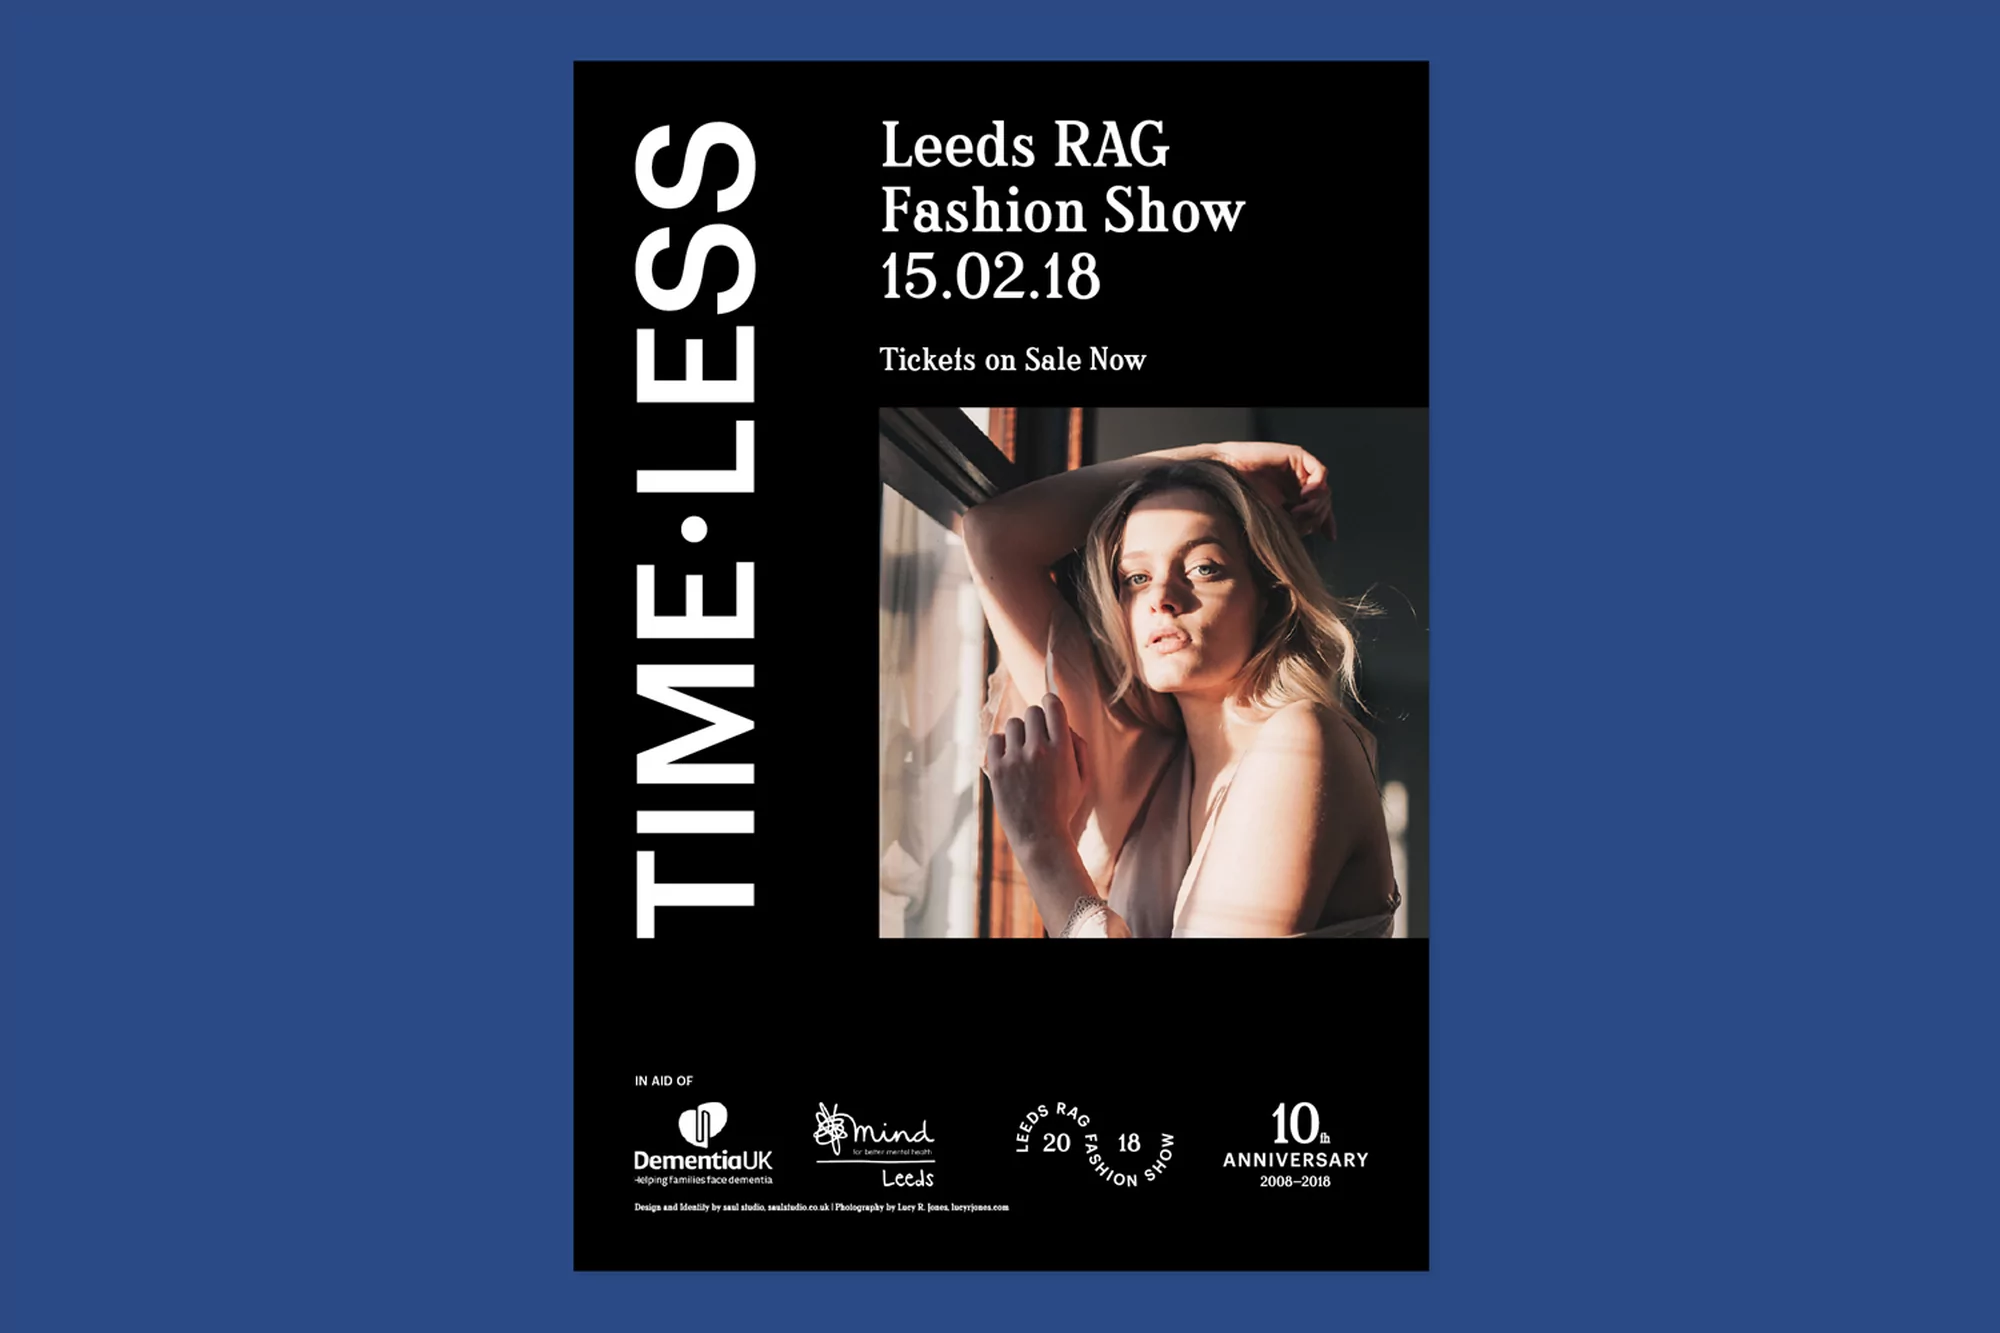 Leeds RAG Fashion Show by Saul Studio